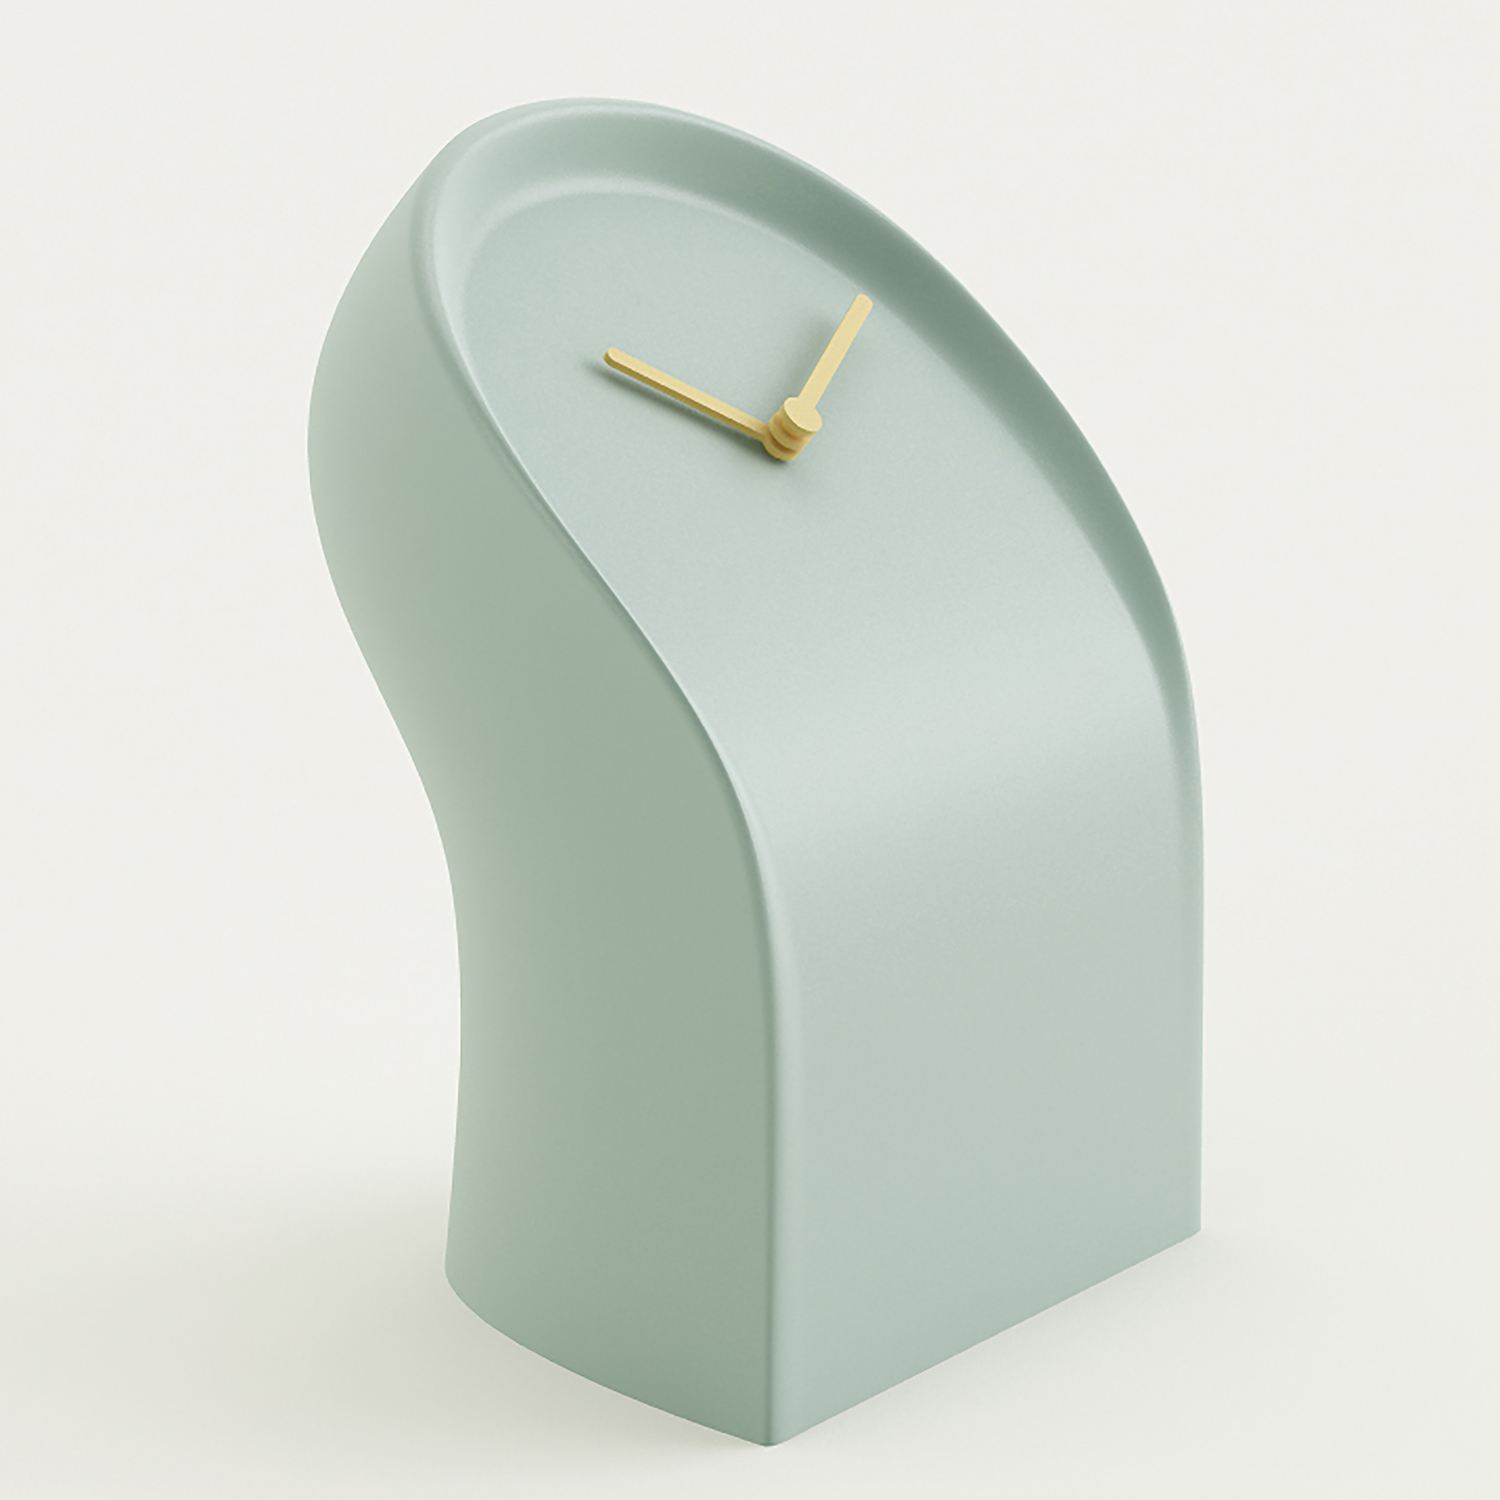 Osvaldo Table clock by MrSmith Studio